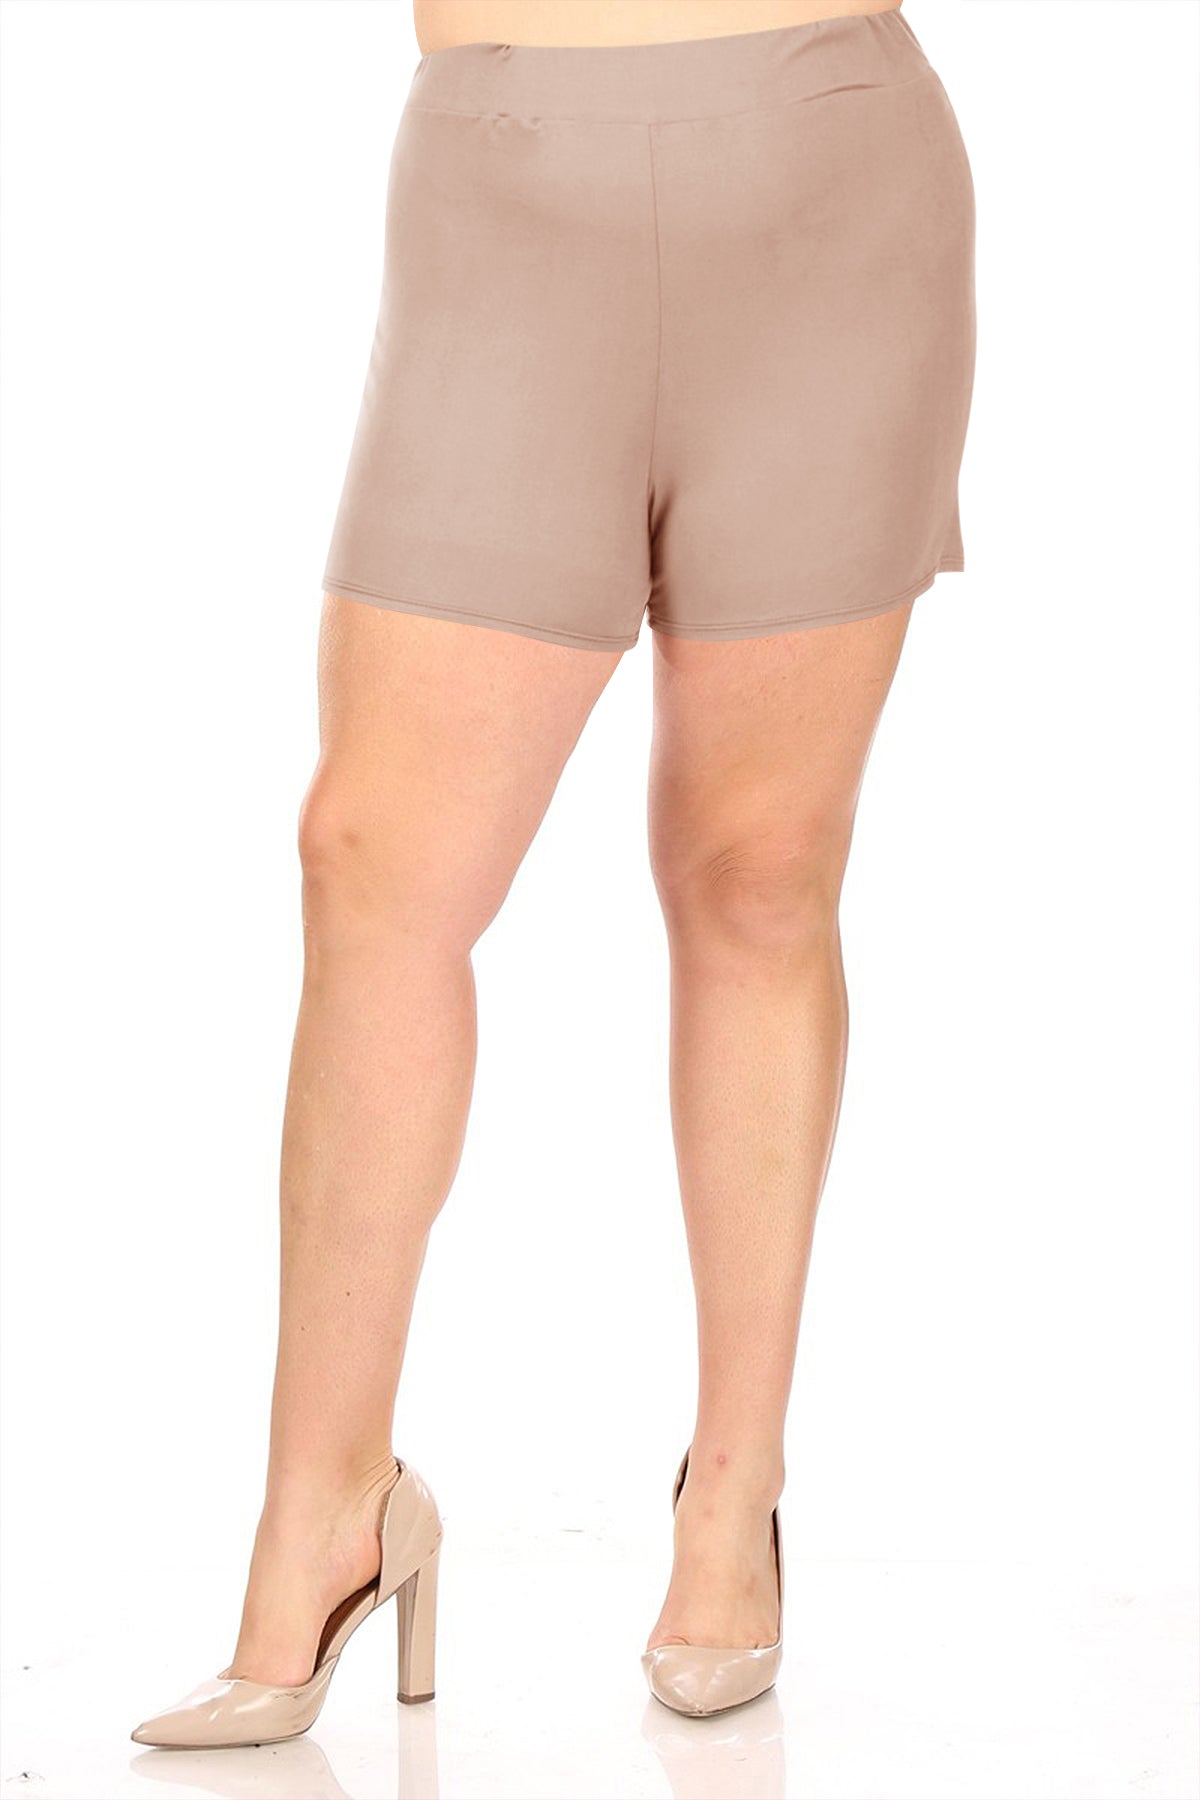 Women's Plus Size Lightweight Elastic High Waist Basic Solid Pants Shorts